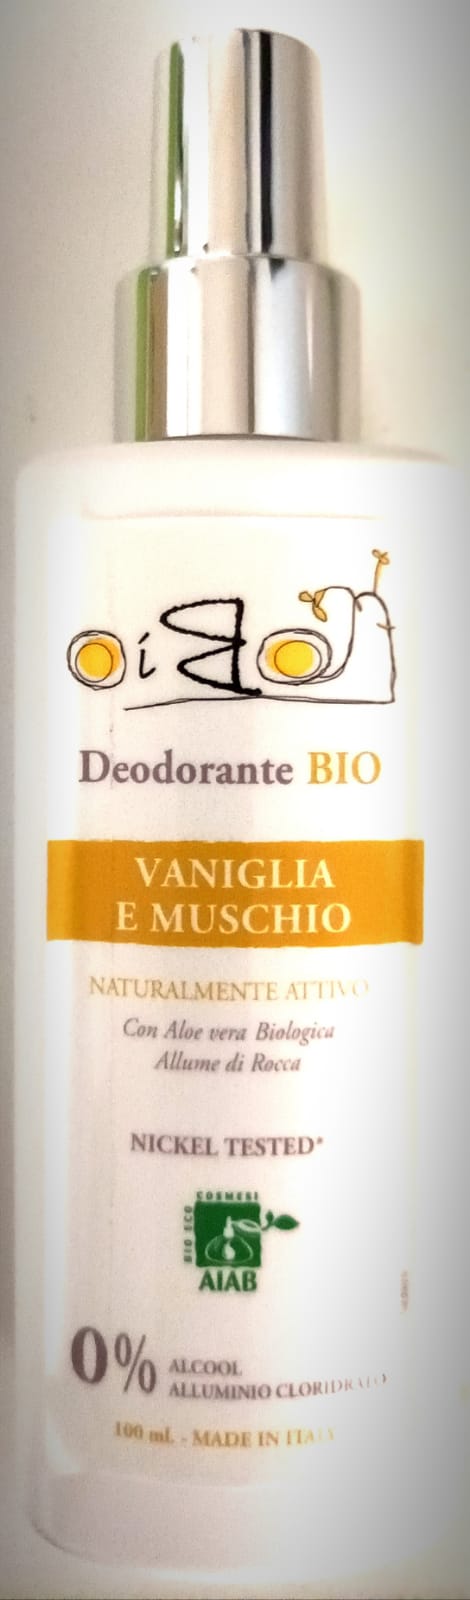 oibo-bio-profumeria_deodorante-spray-vaniglia-e-muschio_oibo_lzeca_labnat